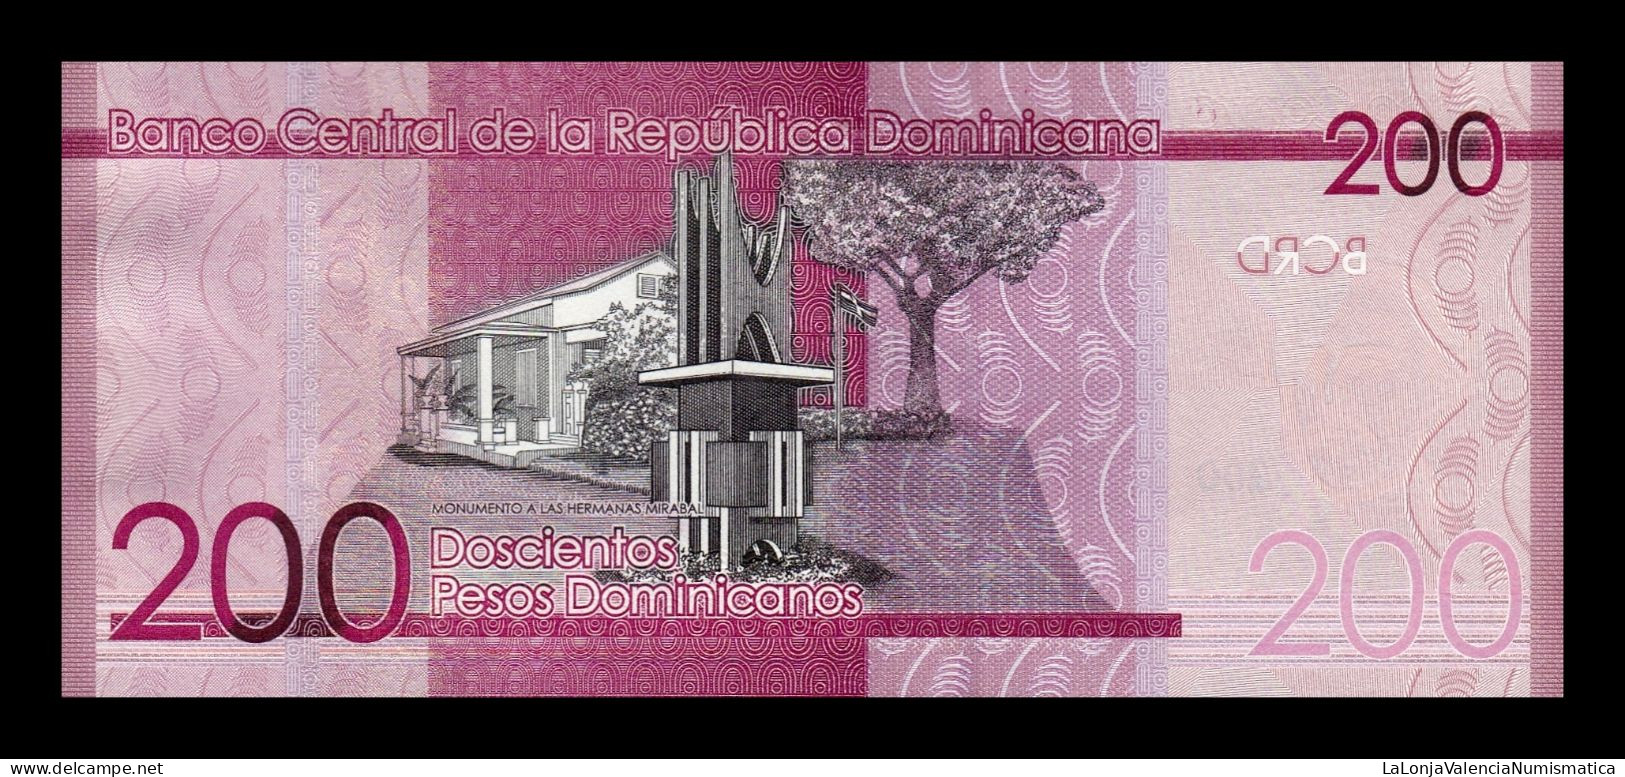 República Dominicana 200 Pesos Dominicanos 2014 Pick 191a Low Serial 885 Sc Unc - República Dominicana